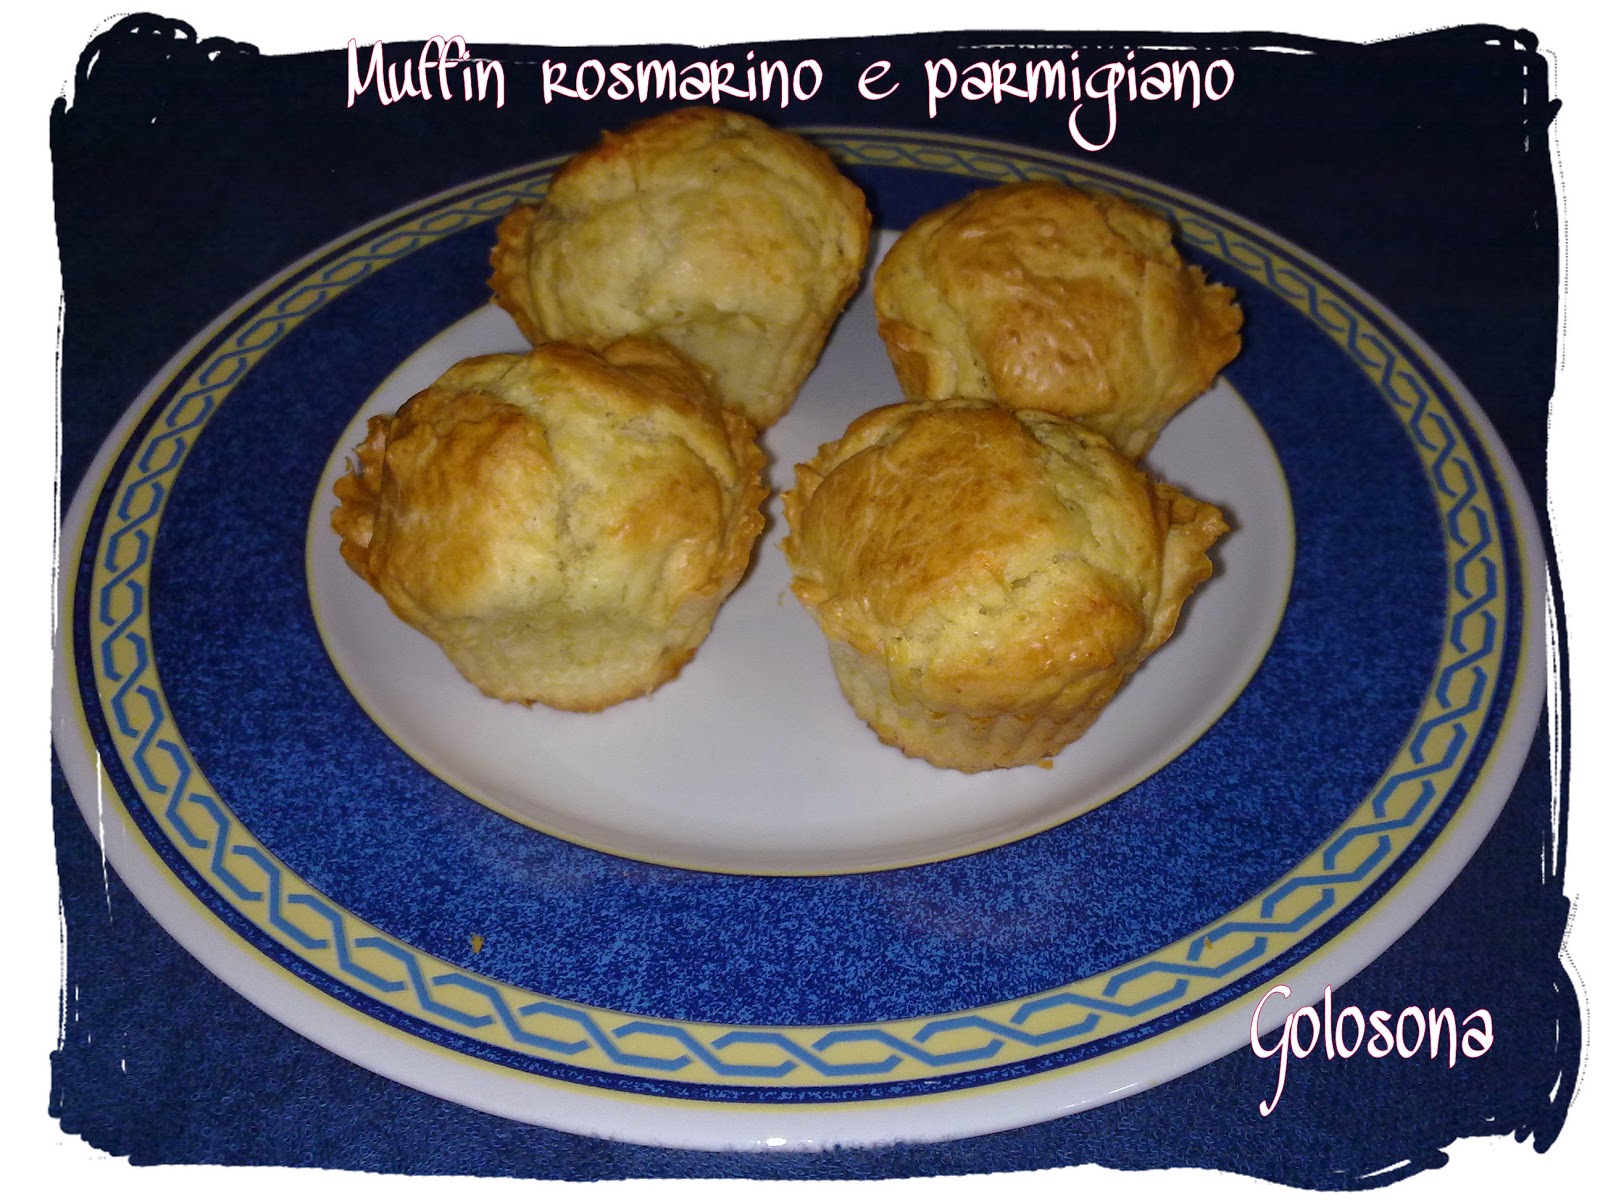 muffin parmigiano e rosmarino